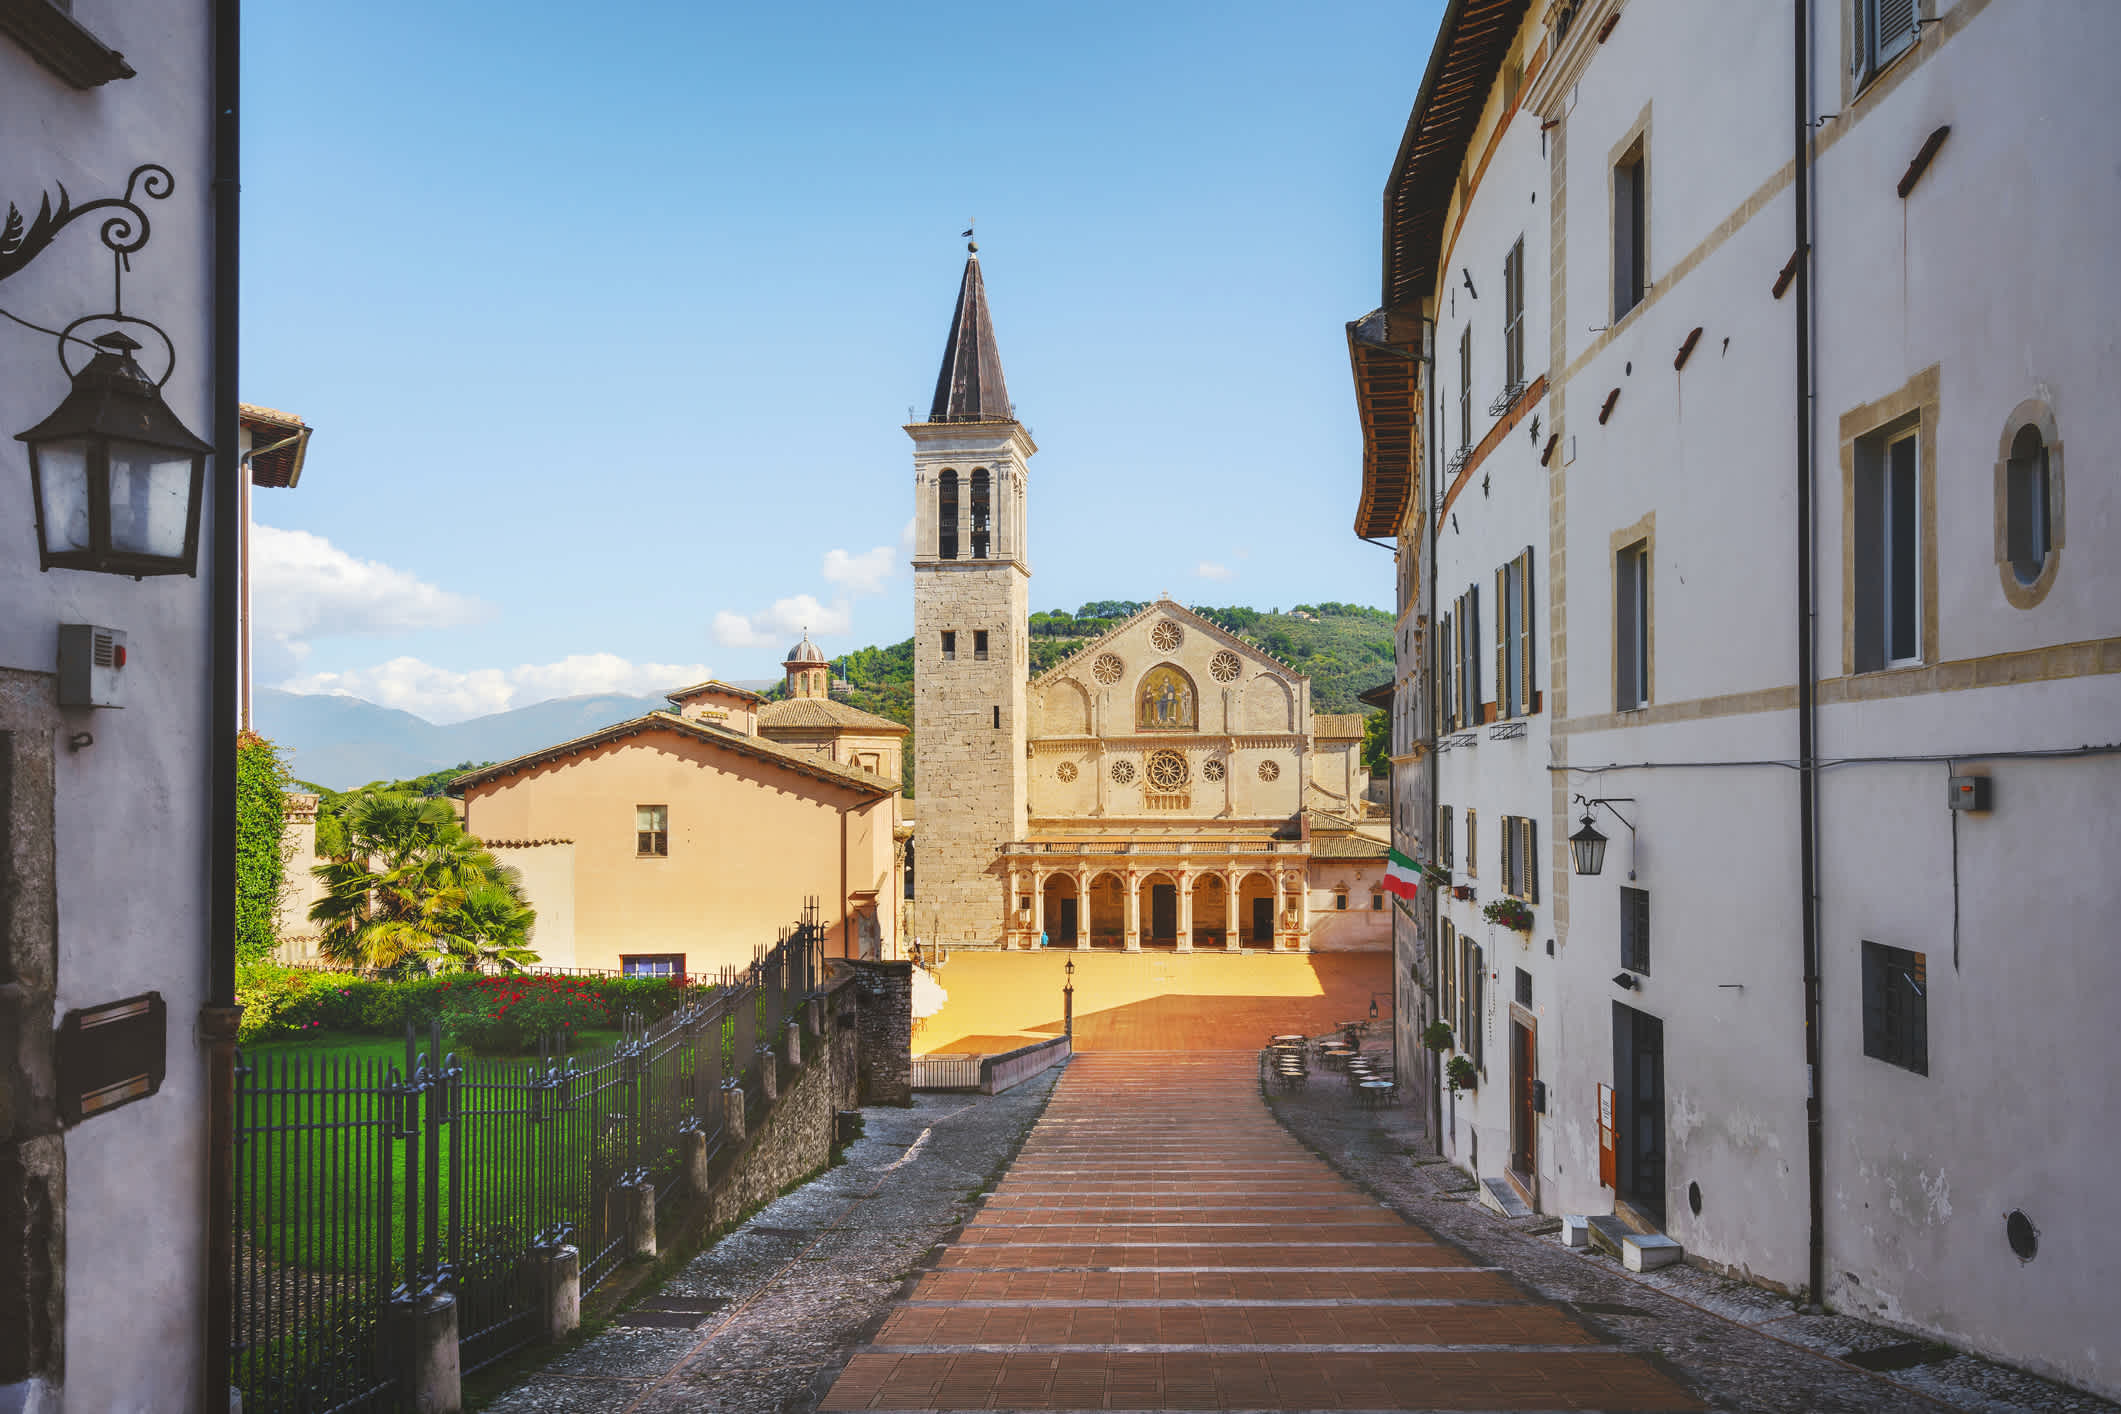  Santa Maria Duomo Kathedrale in Spoleto, Umbrien, Italien